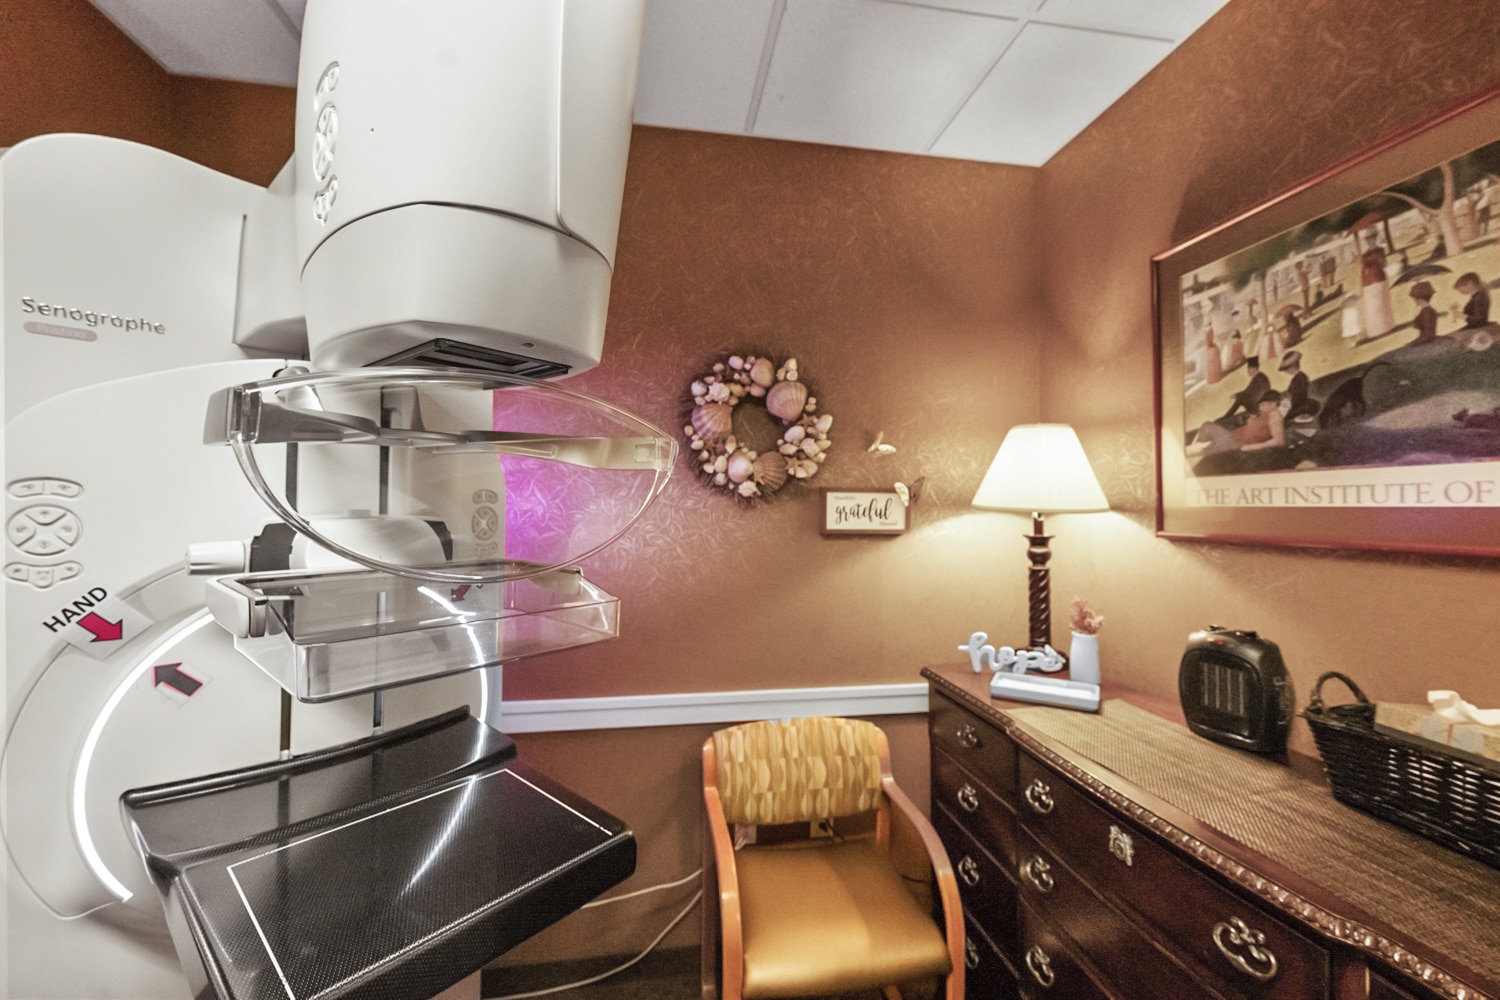 A Digital Mammography machine